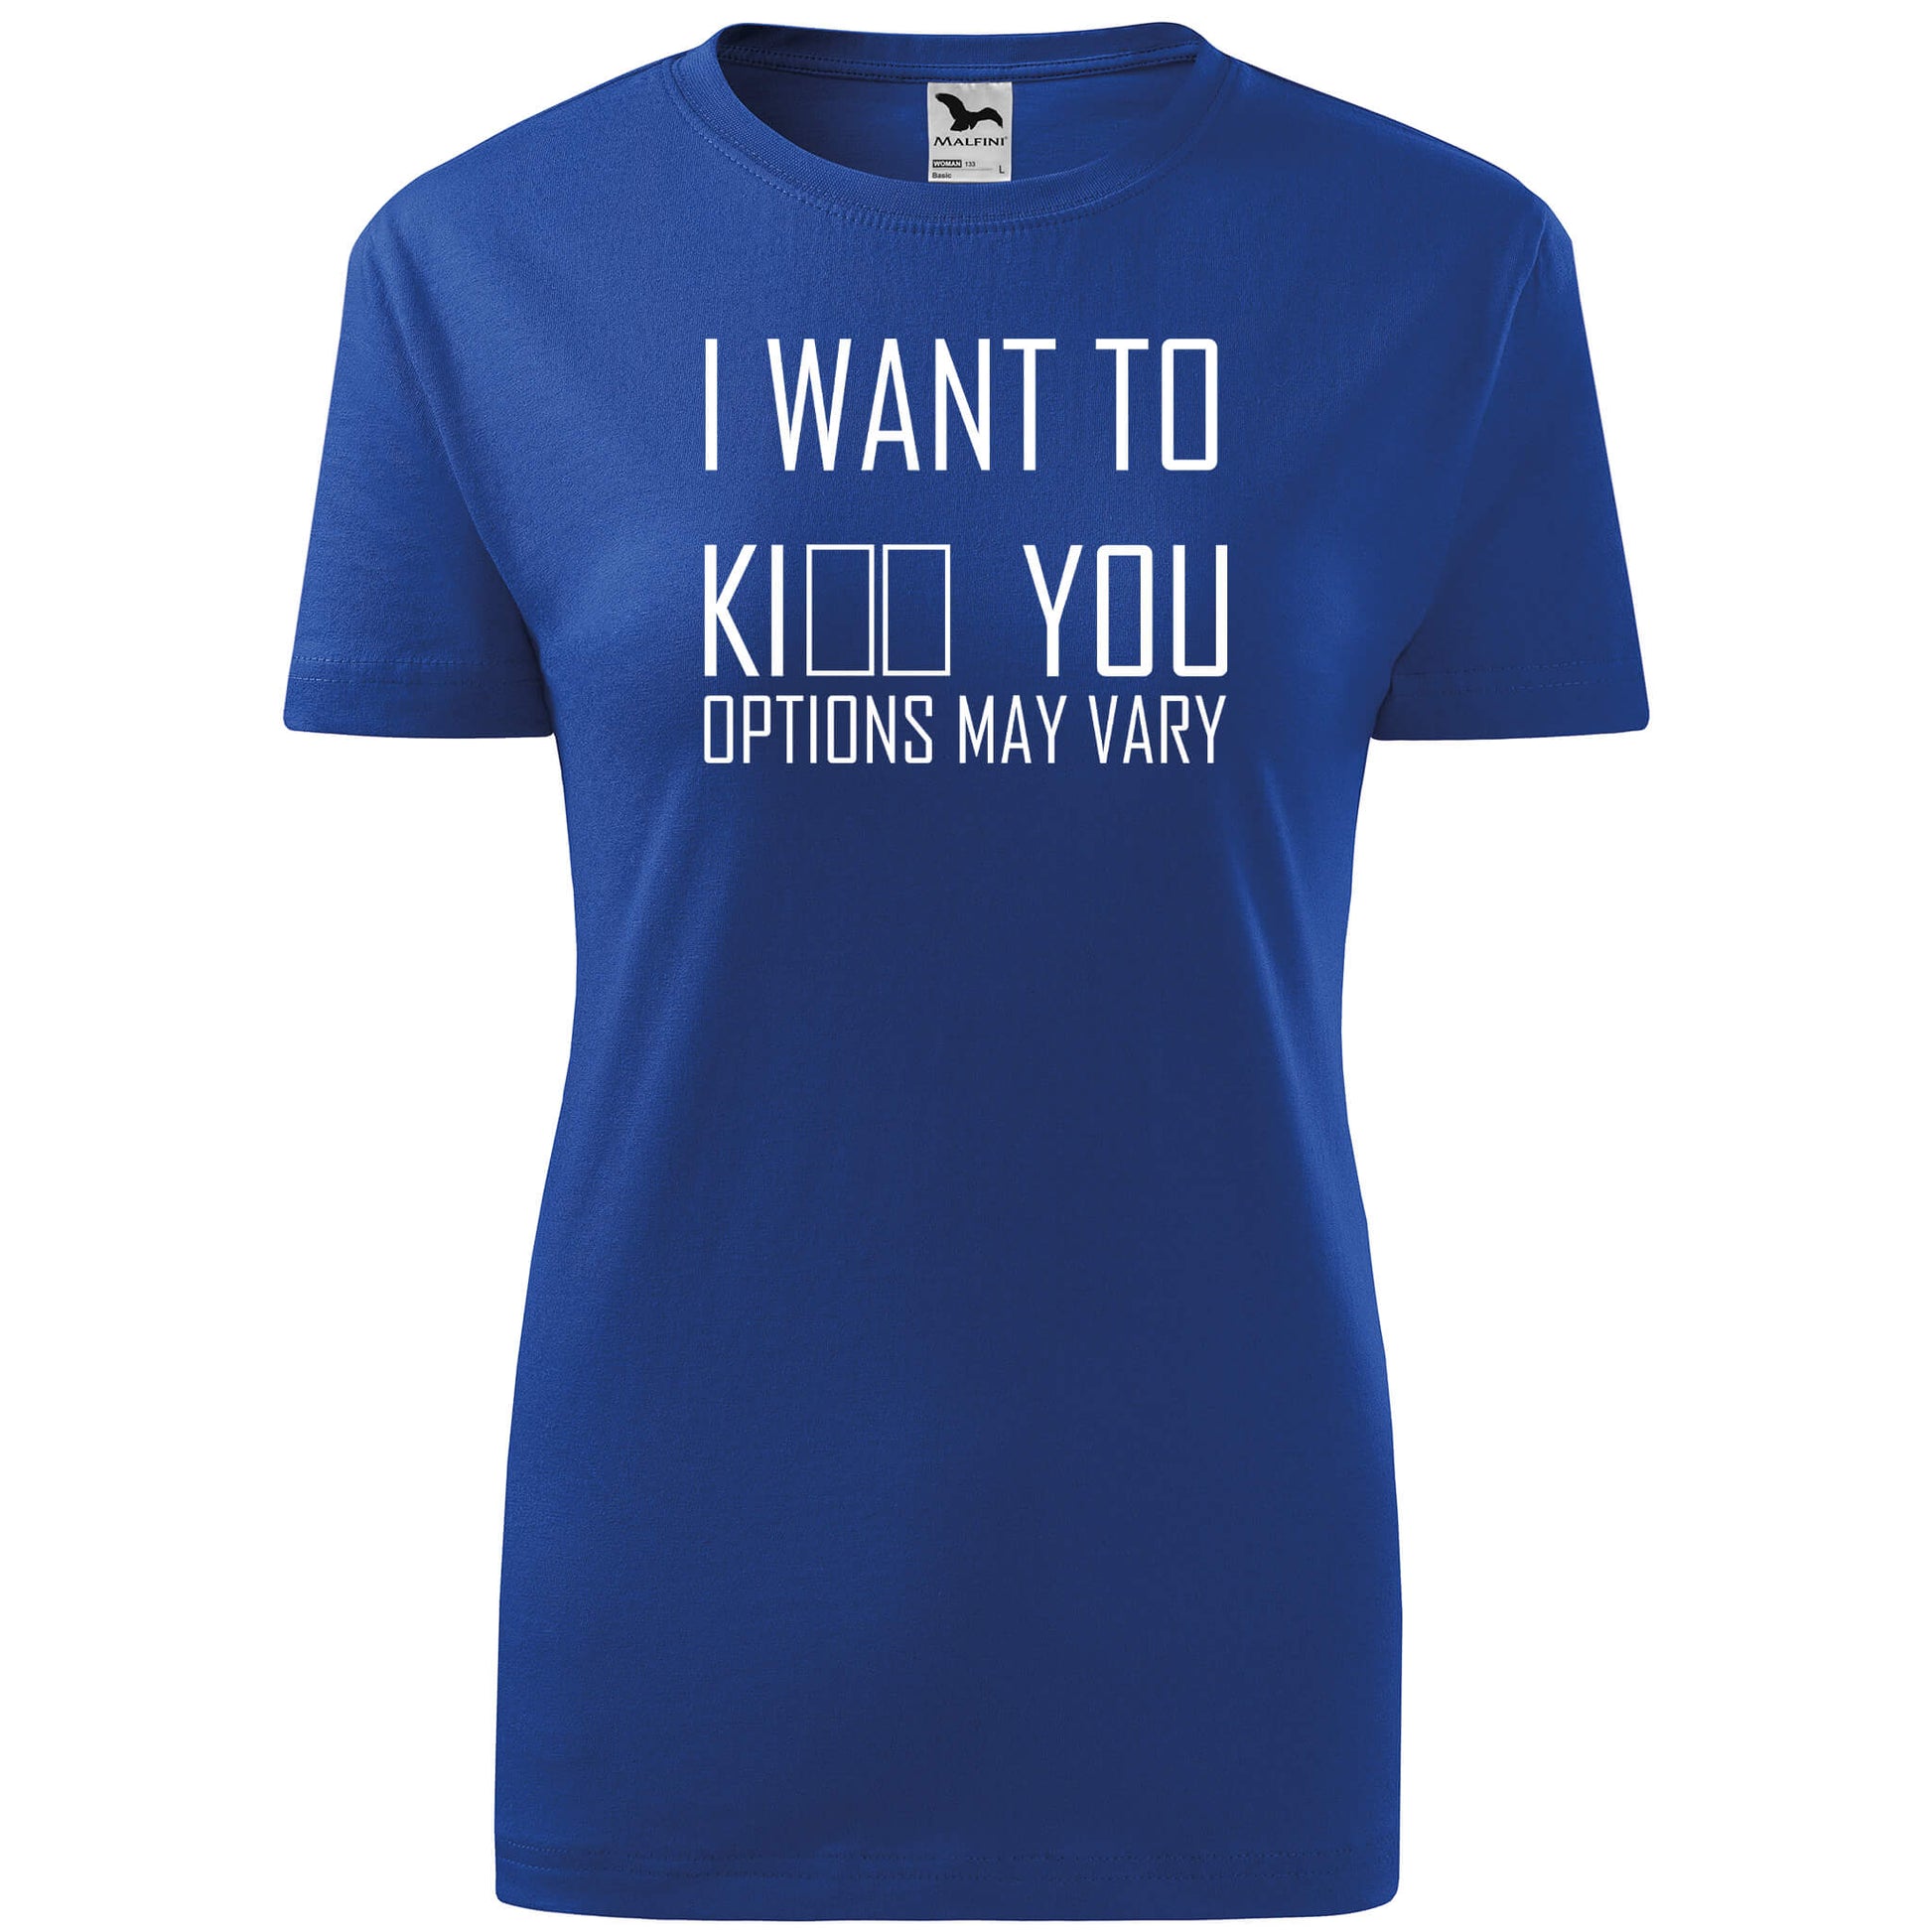 T-shirt - I want to kill you - options may vary - rvdesignprint